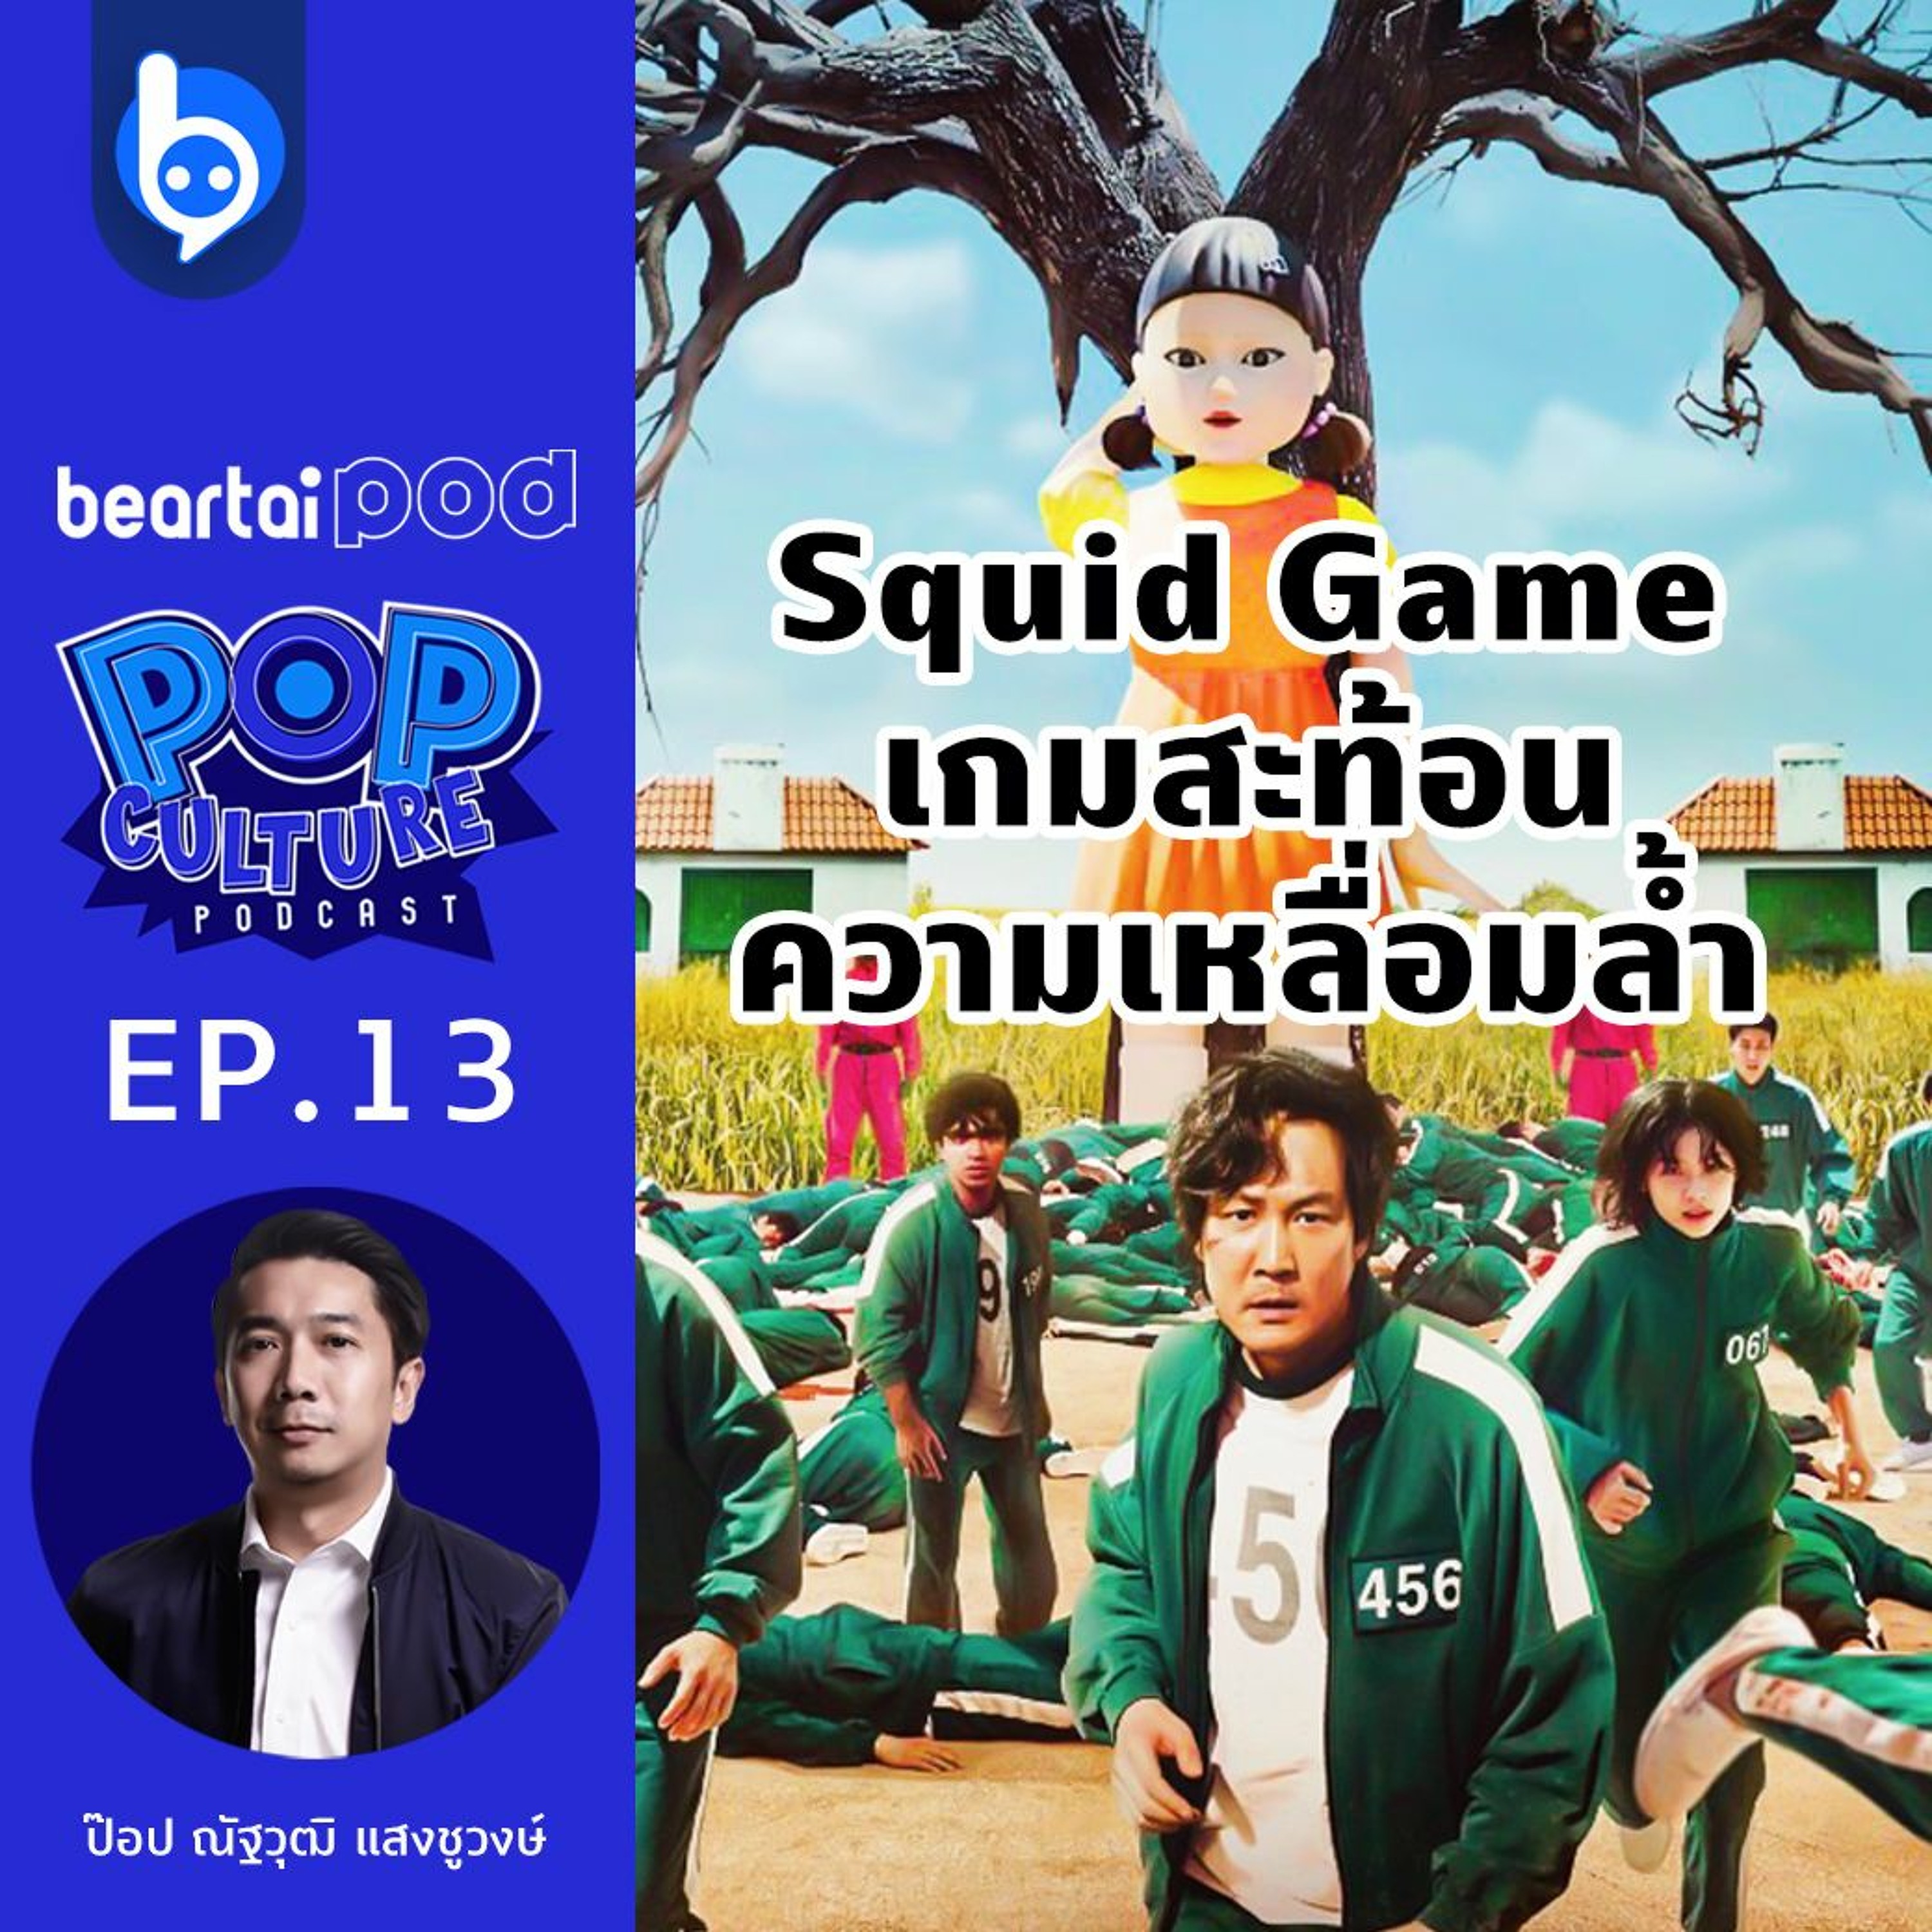 Pop Culture Podcast EP13 : Squid Game เกมสะท้อนความเหลื่อมล้ำ